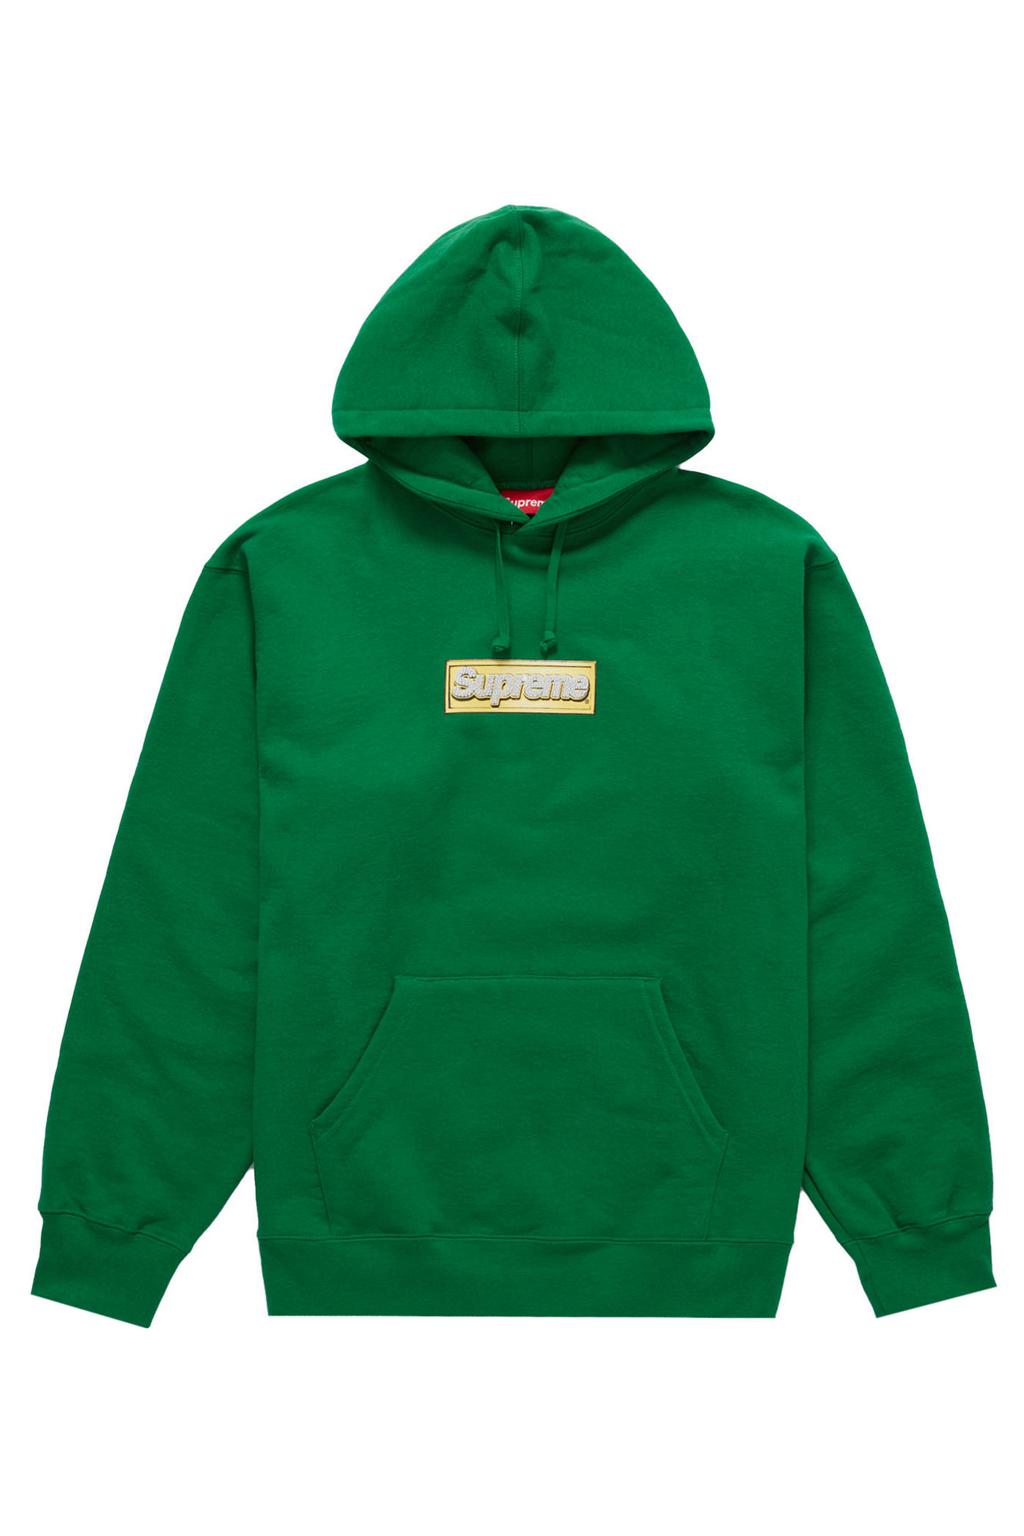 supreme Bling Hooded Sweatshirt Green